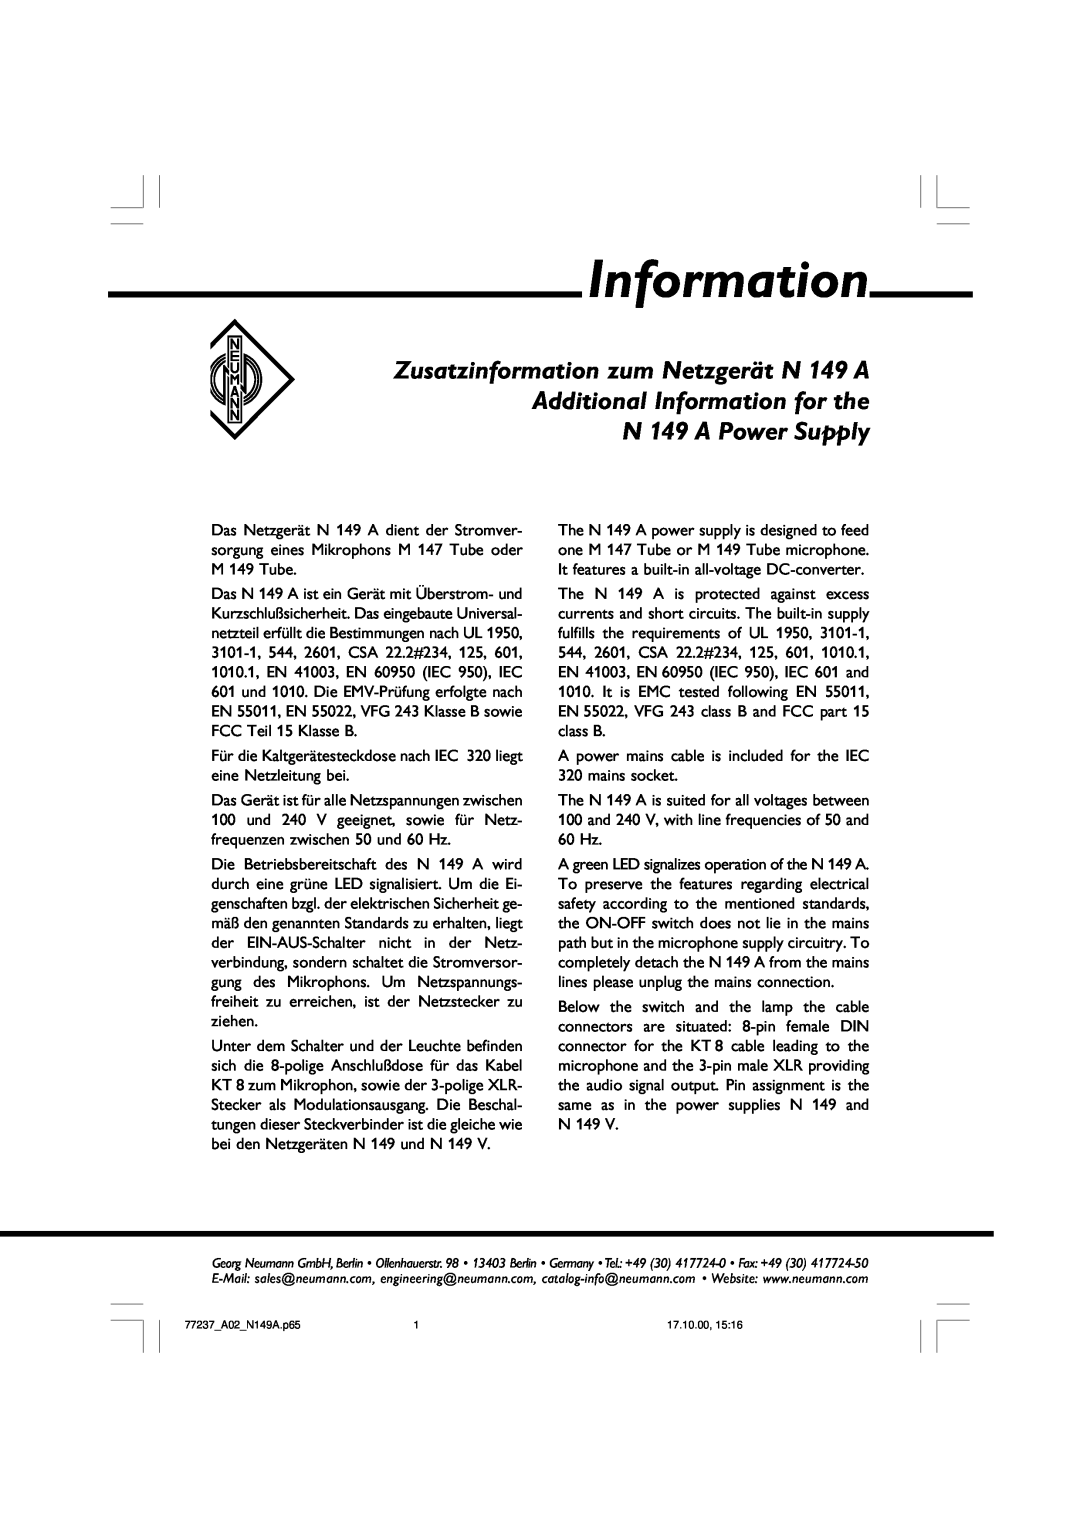 Neumann.Berlin N 149 A manual Information 